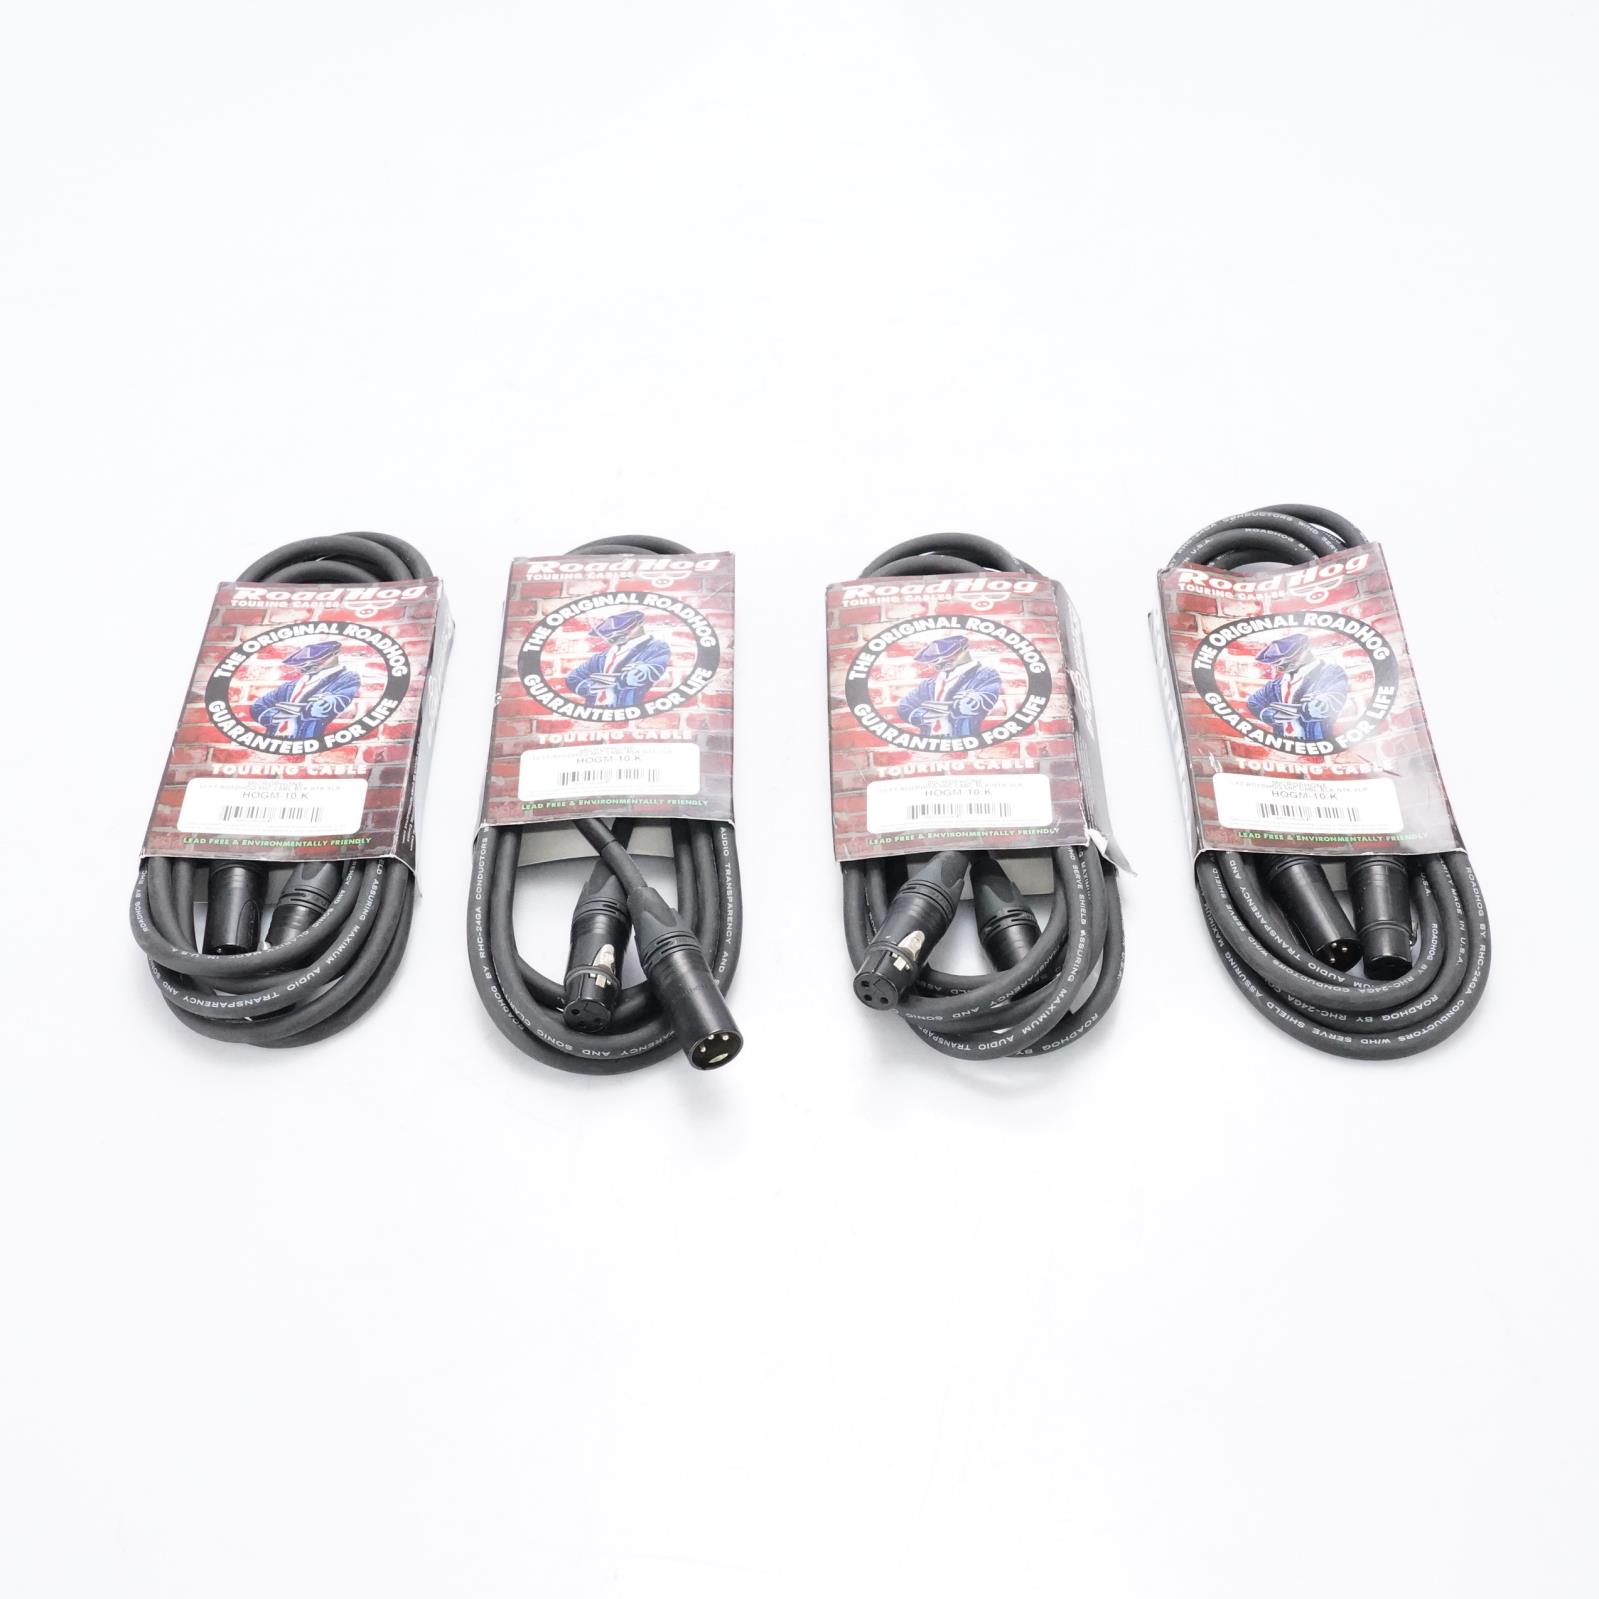 4 RapcoHorizon HOGM-10 RoadHog XLR Microphone Cable 10' Black #51734